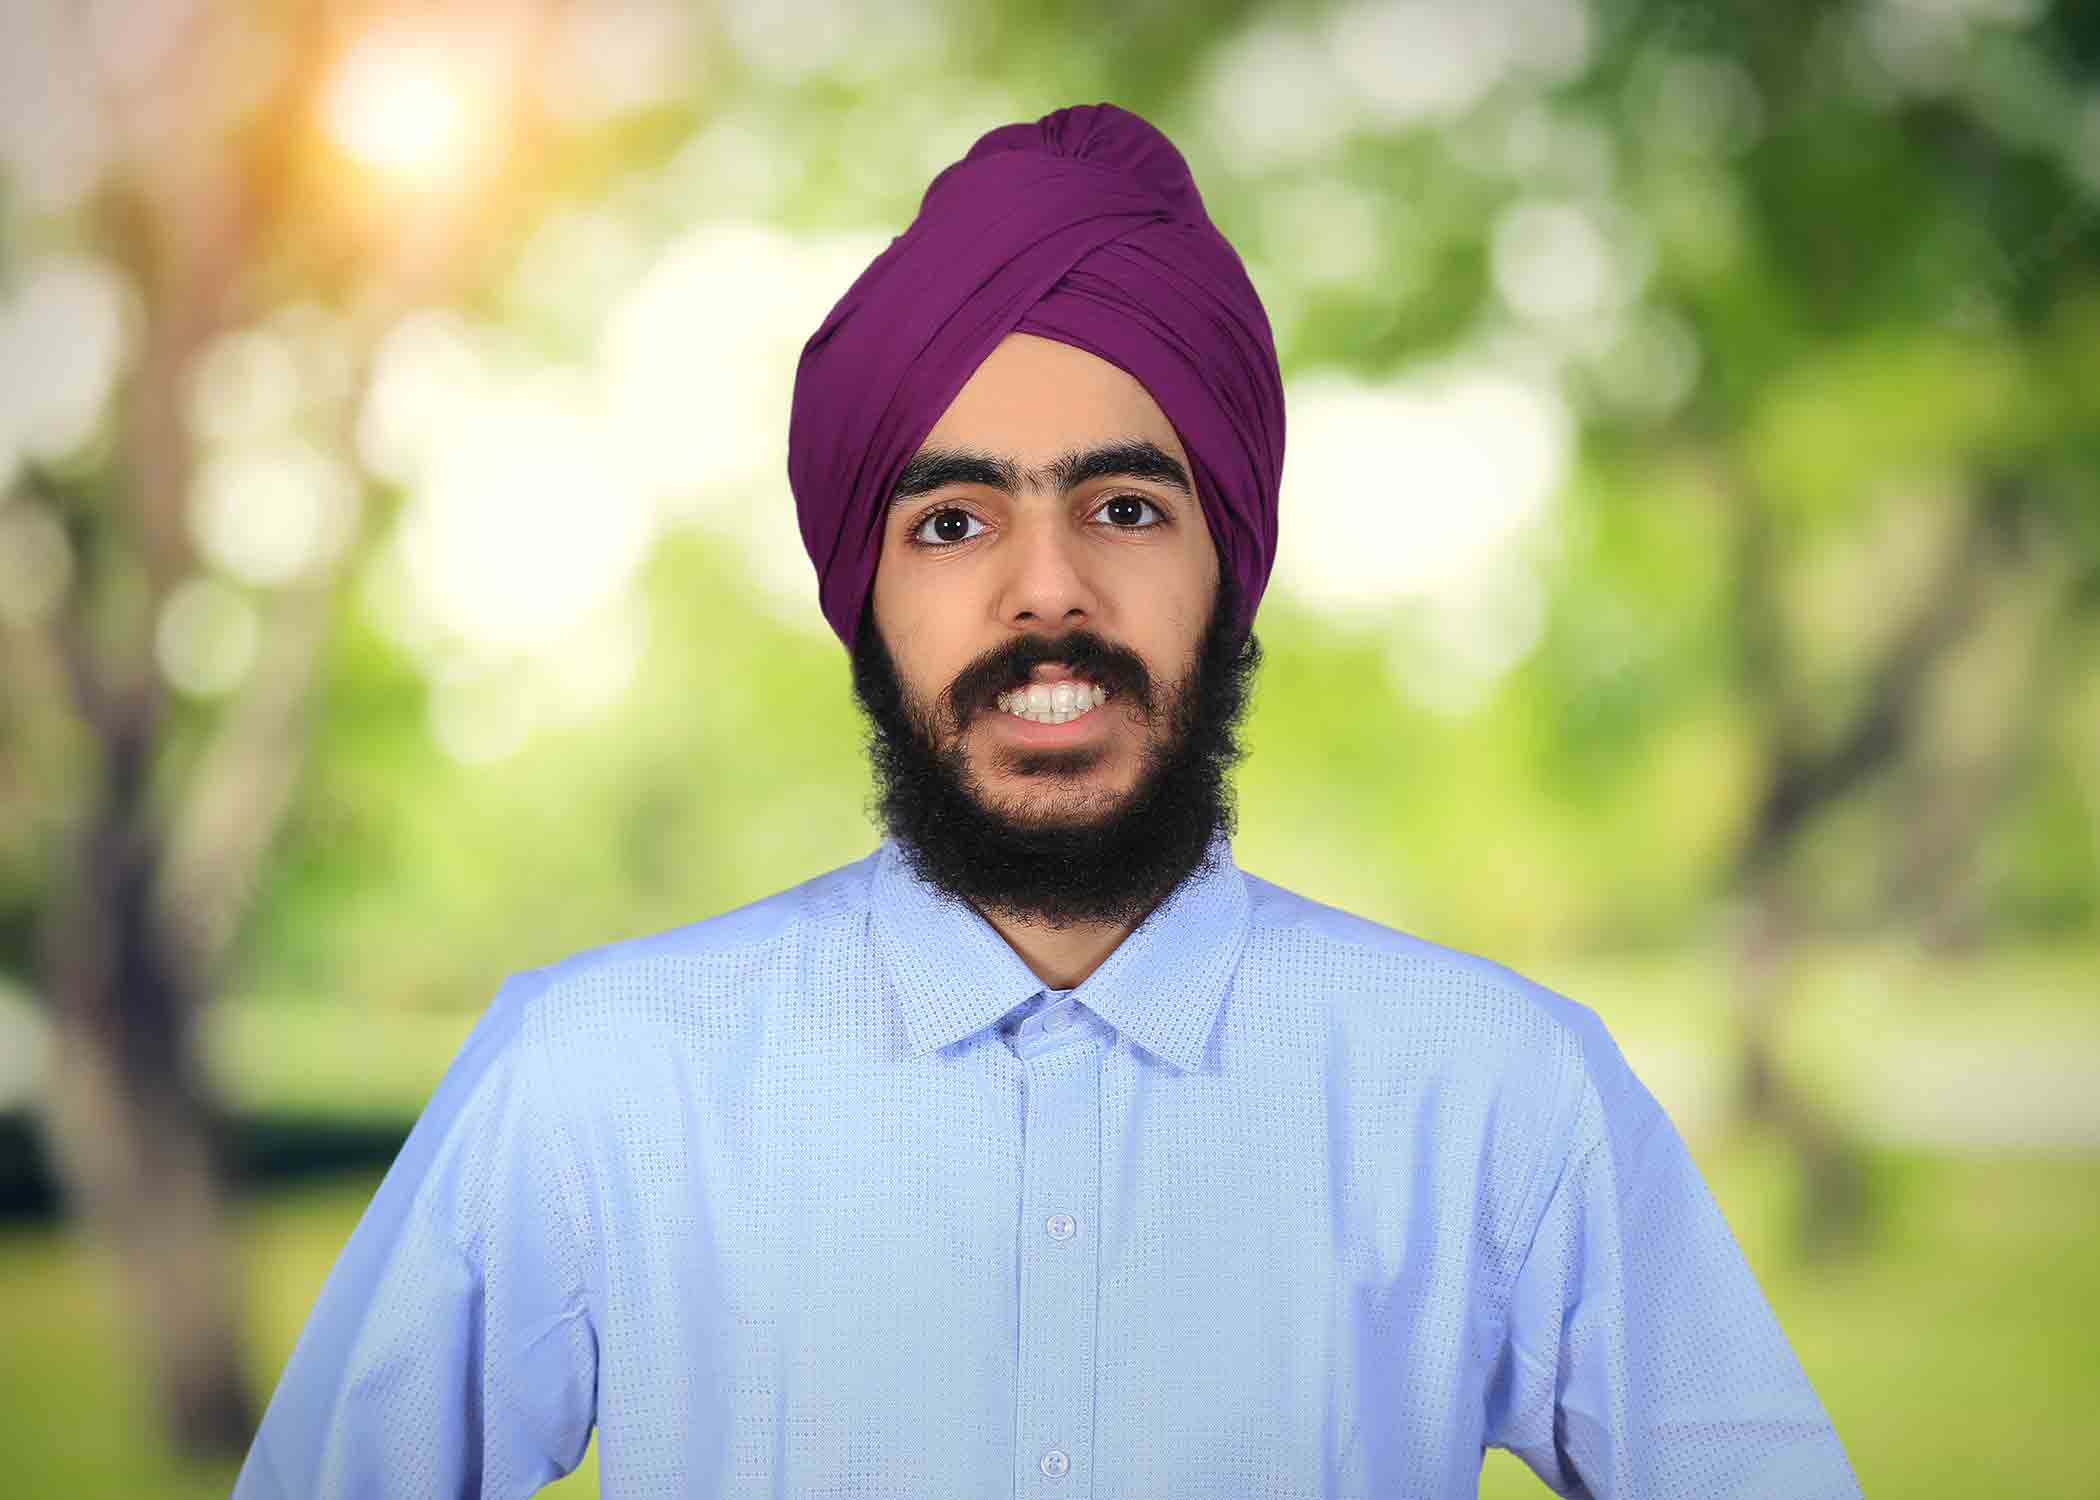 Karan Singh wears a blue button-down shirt and a magenta turban as he smiles for his headshot.